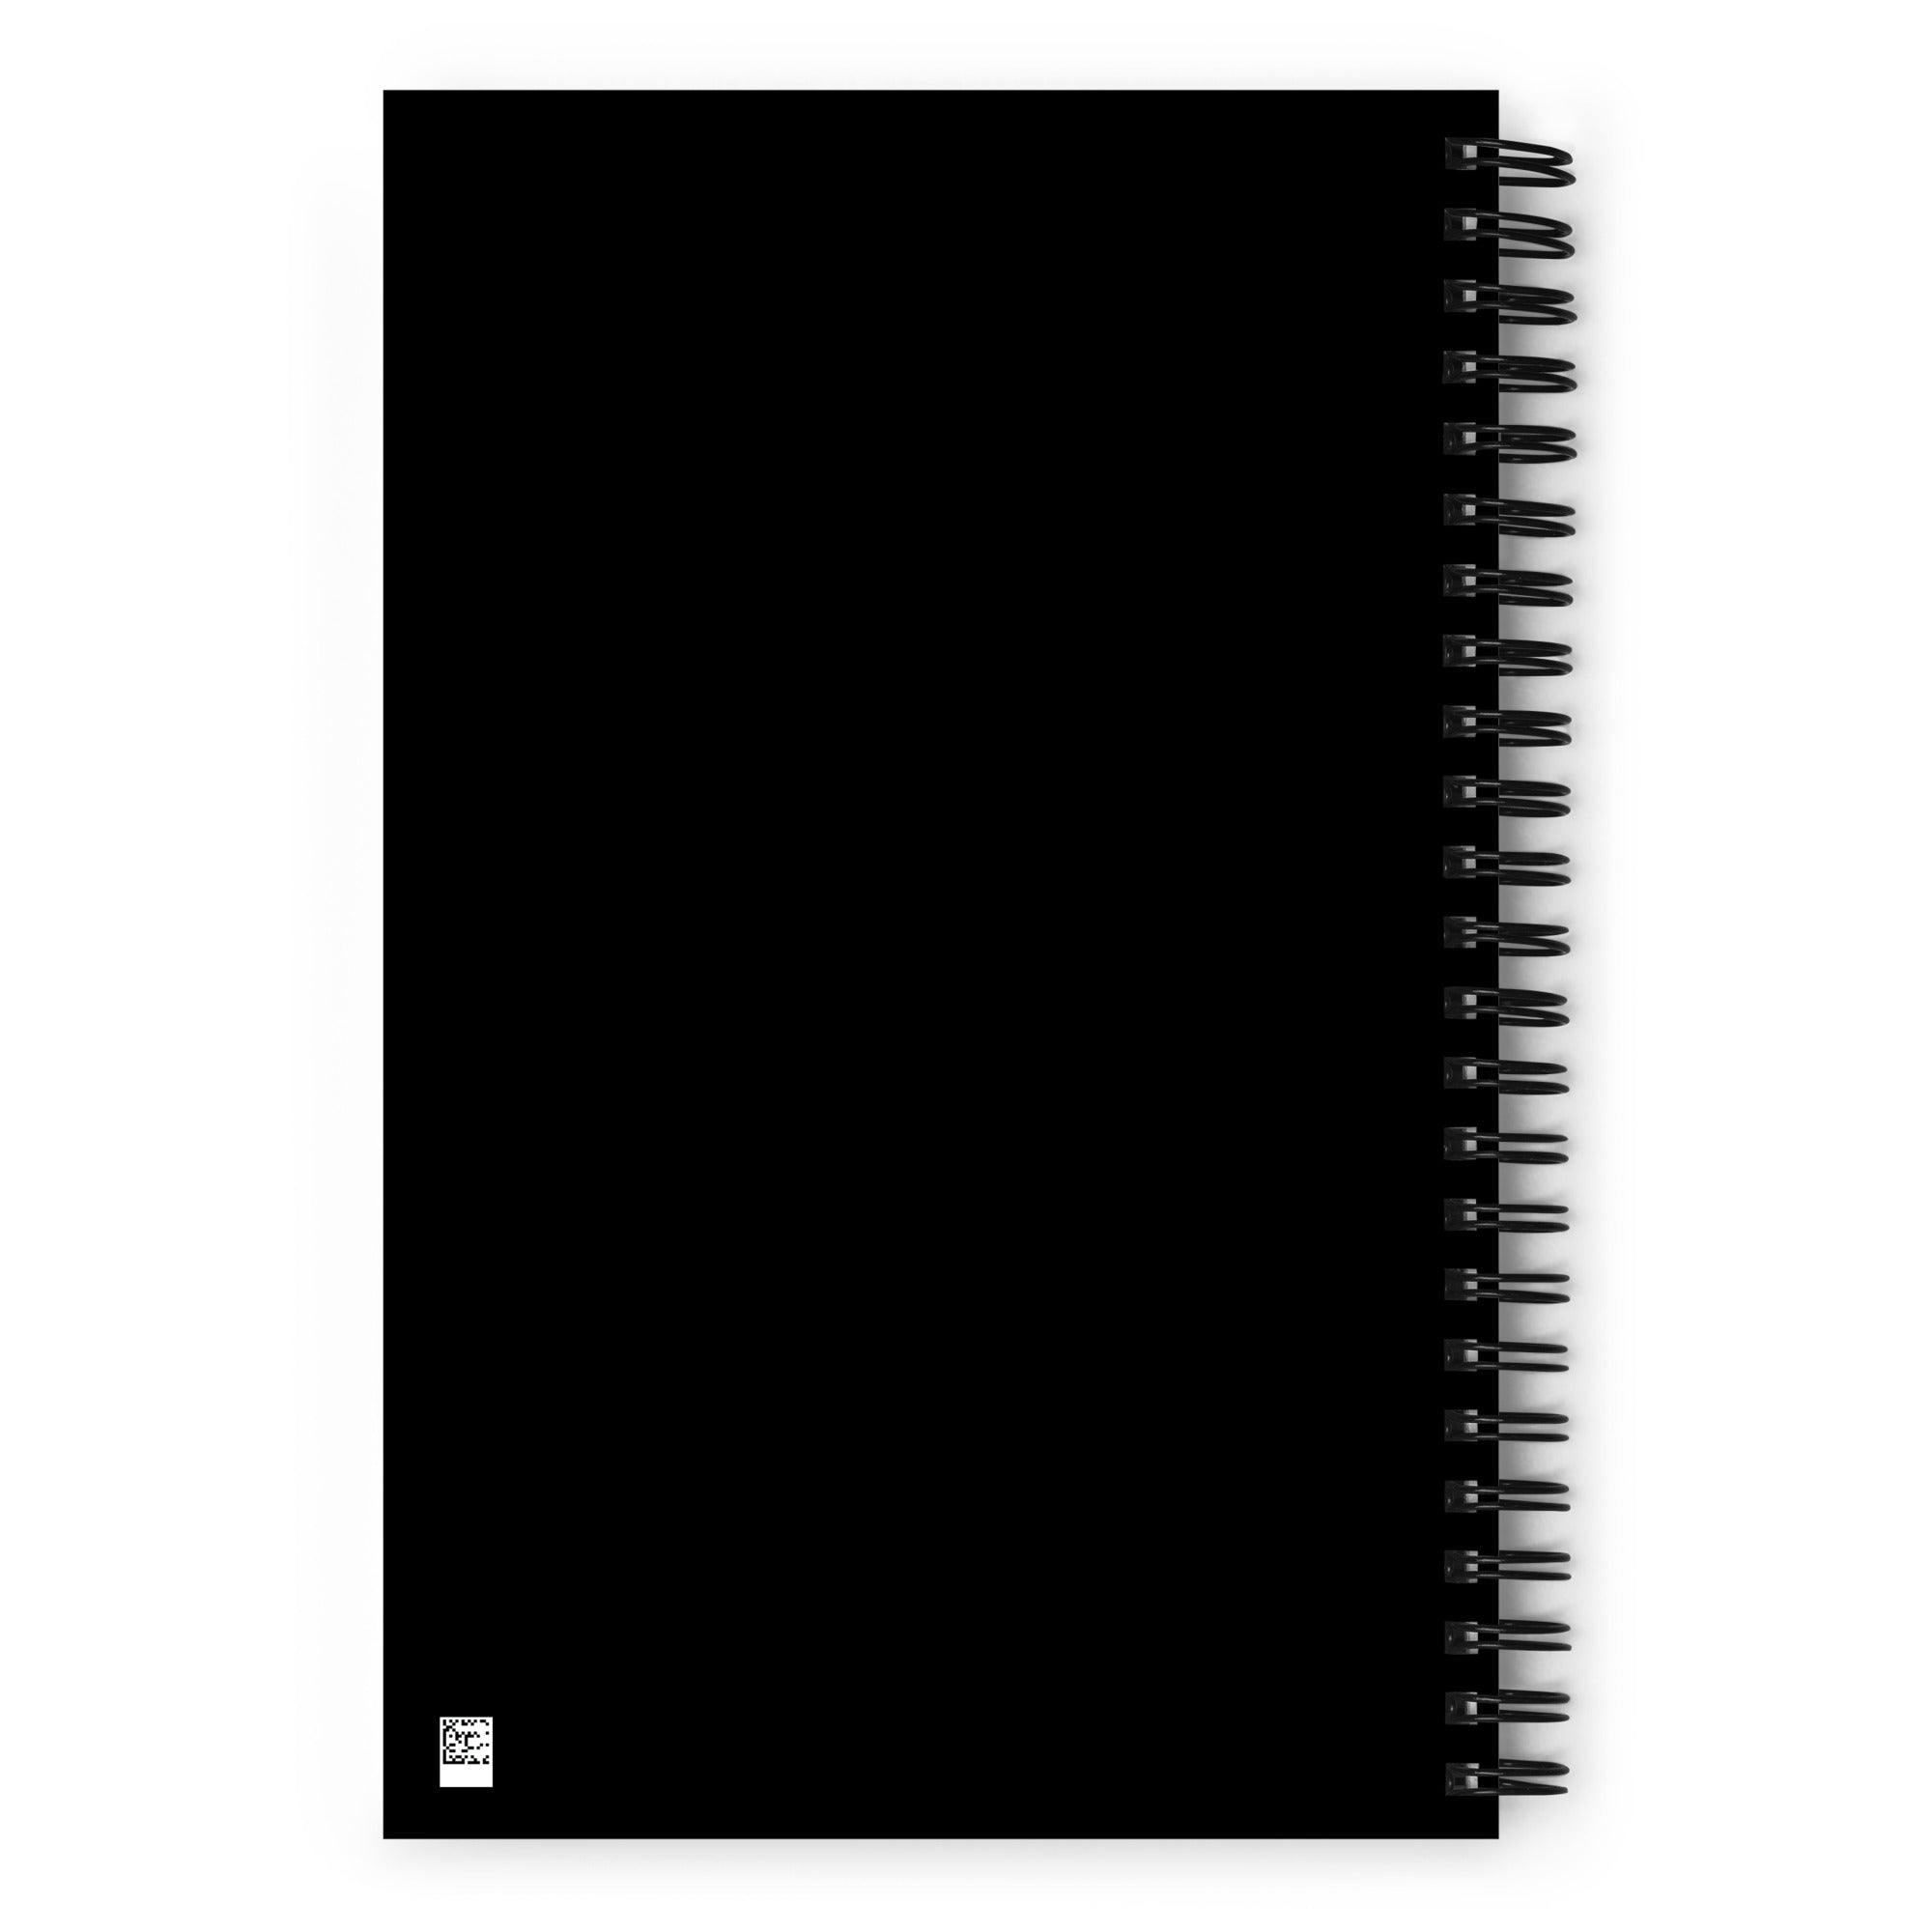 Spiral notebook- Pansexual